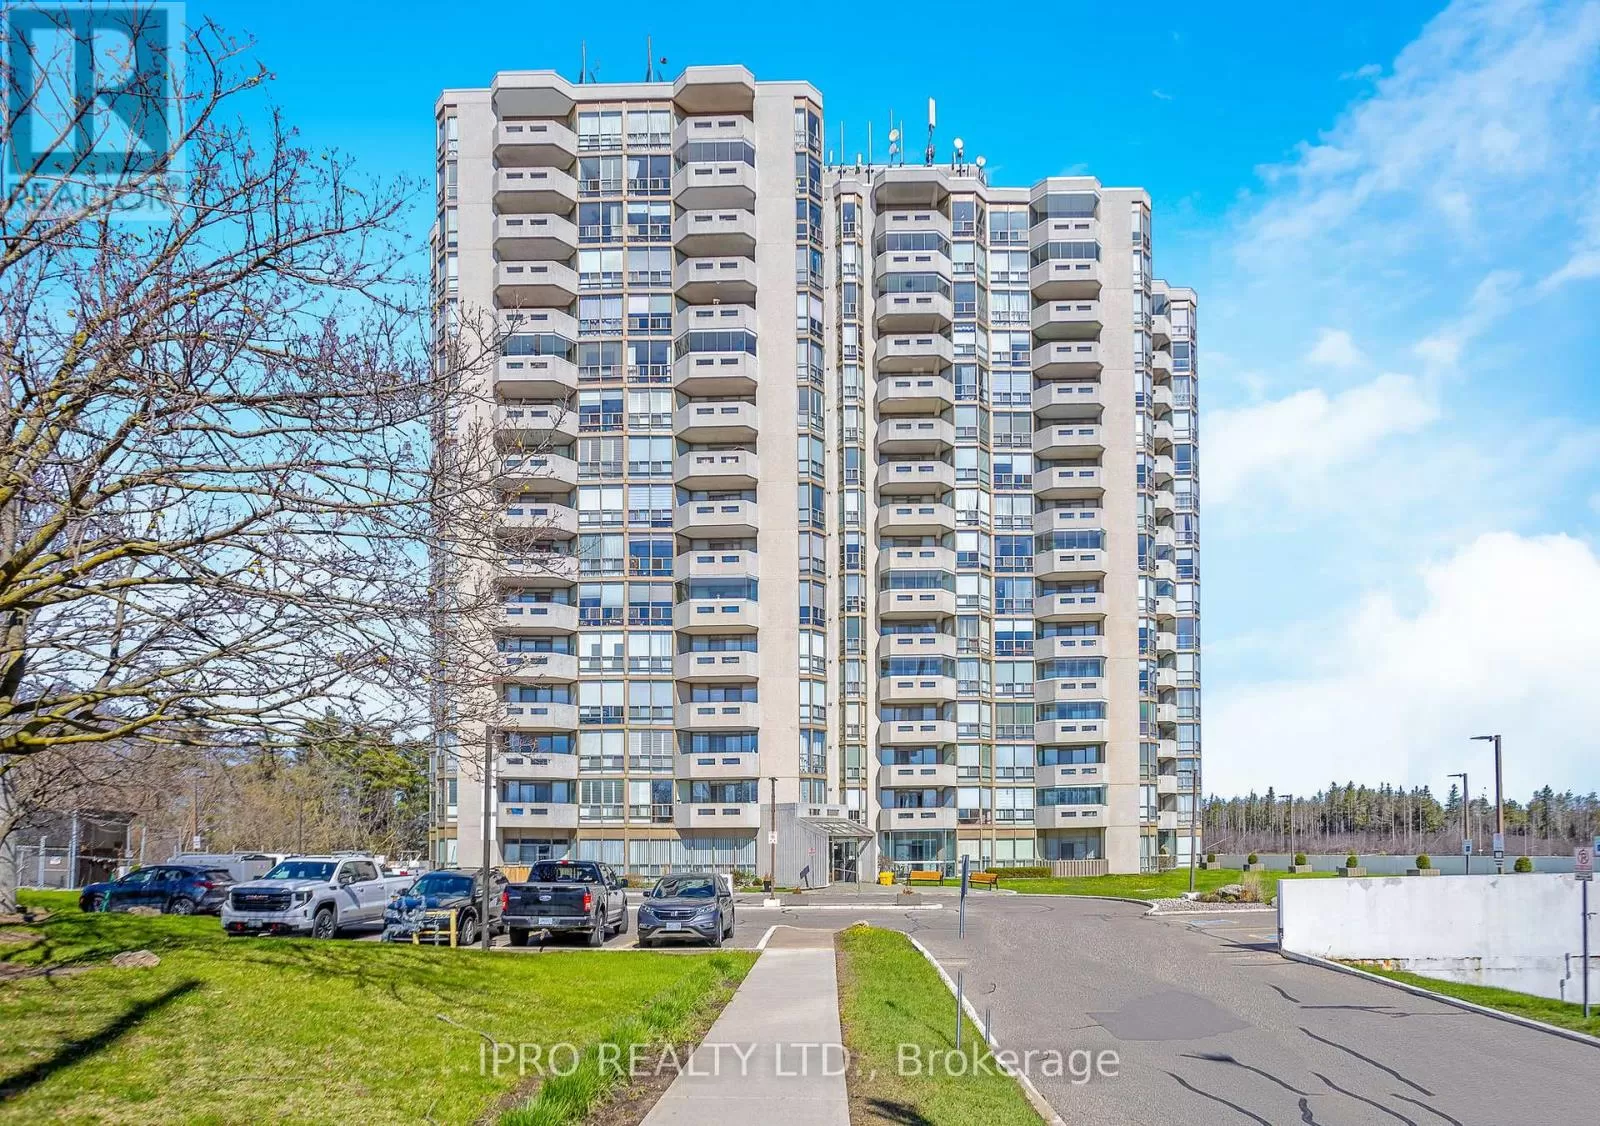 Apartment for rent: #1101 -20 Mcfarlane Dr, Halton Hills, Ontario L7G 5J8